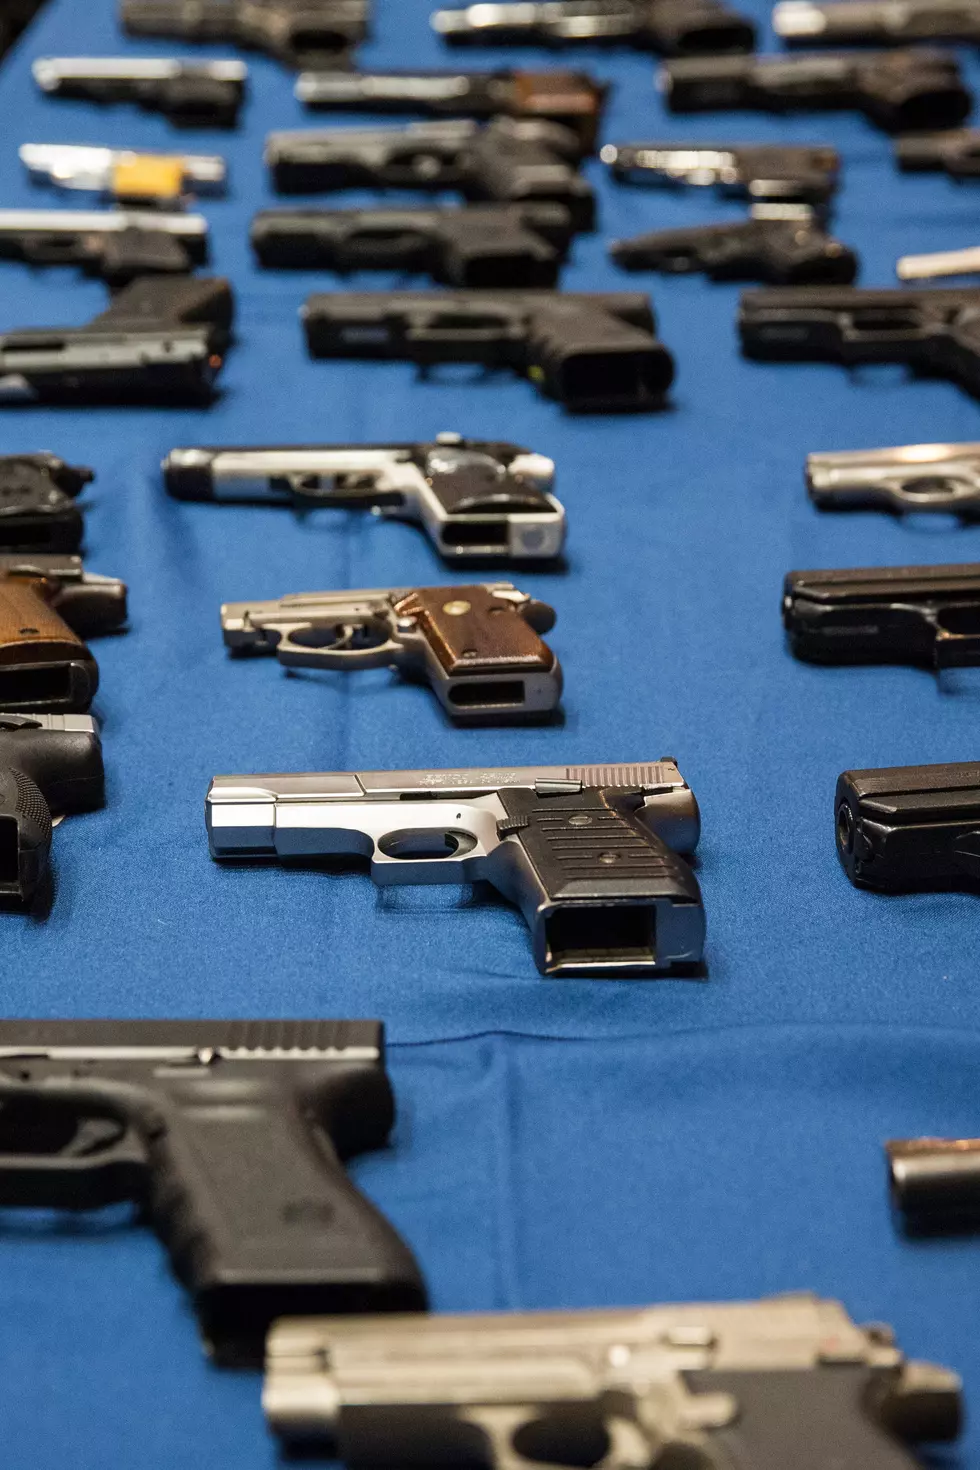 New Rules Would Tighten Gun Sale Checks